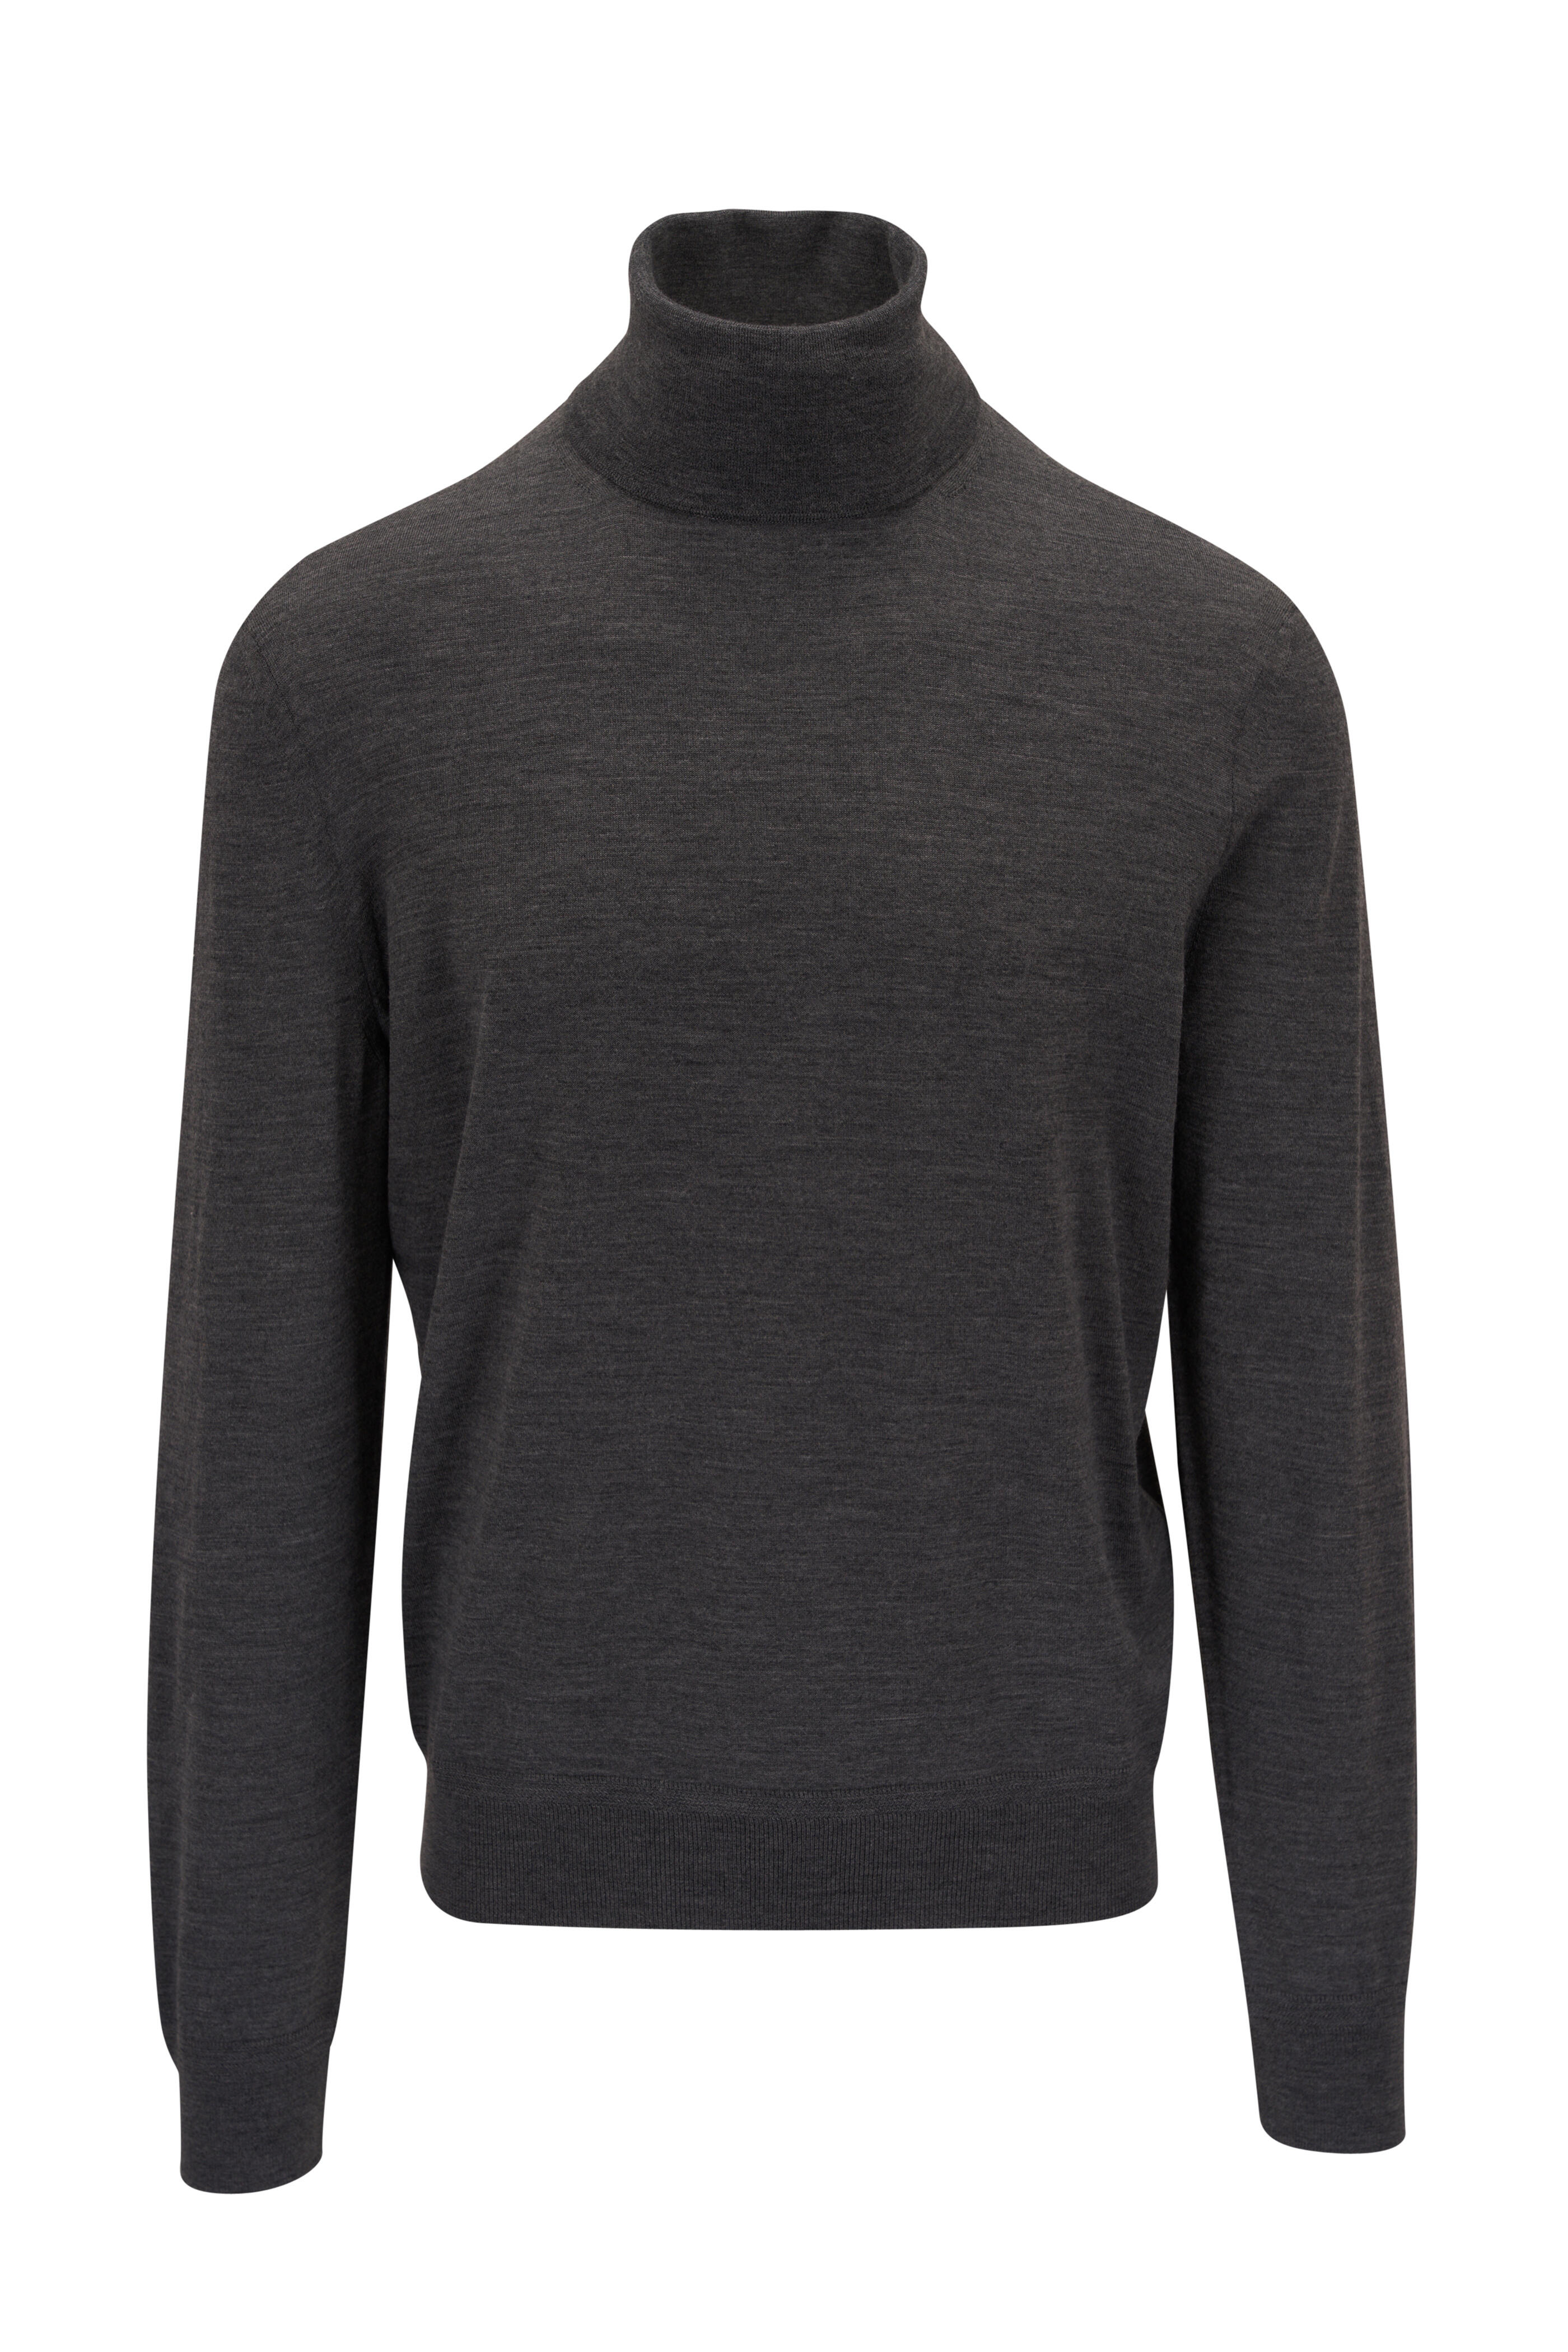 Tom Ford - Fine Gauge Gray Wool Turtleneck Sweater